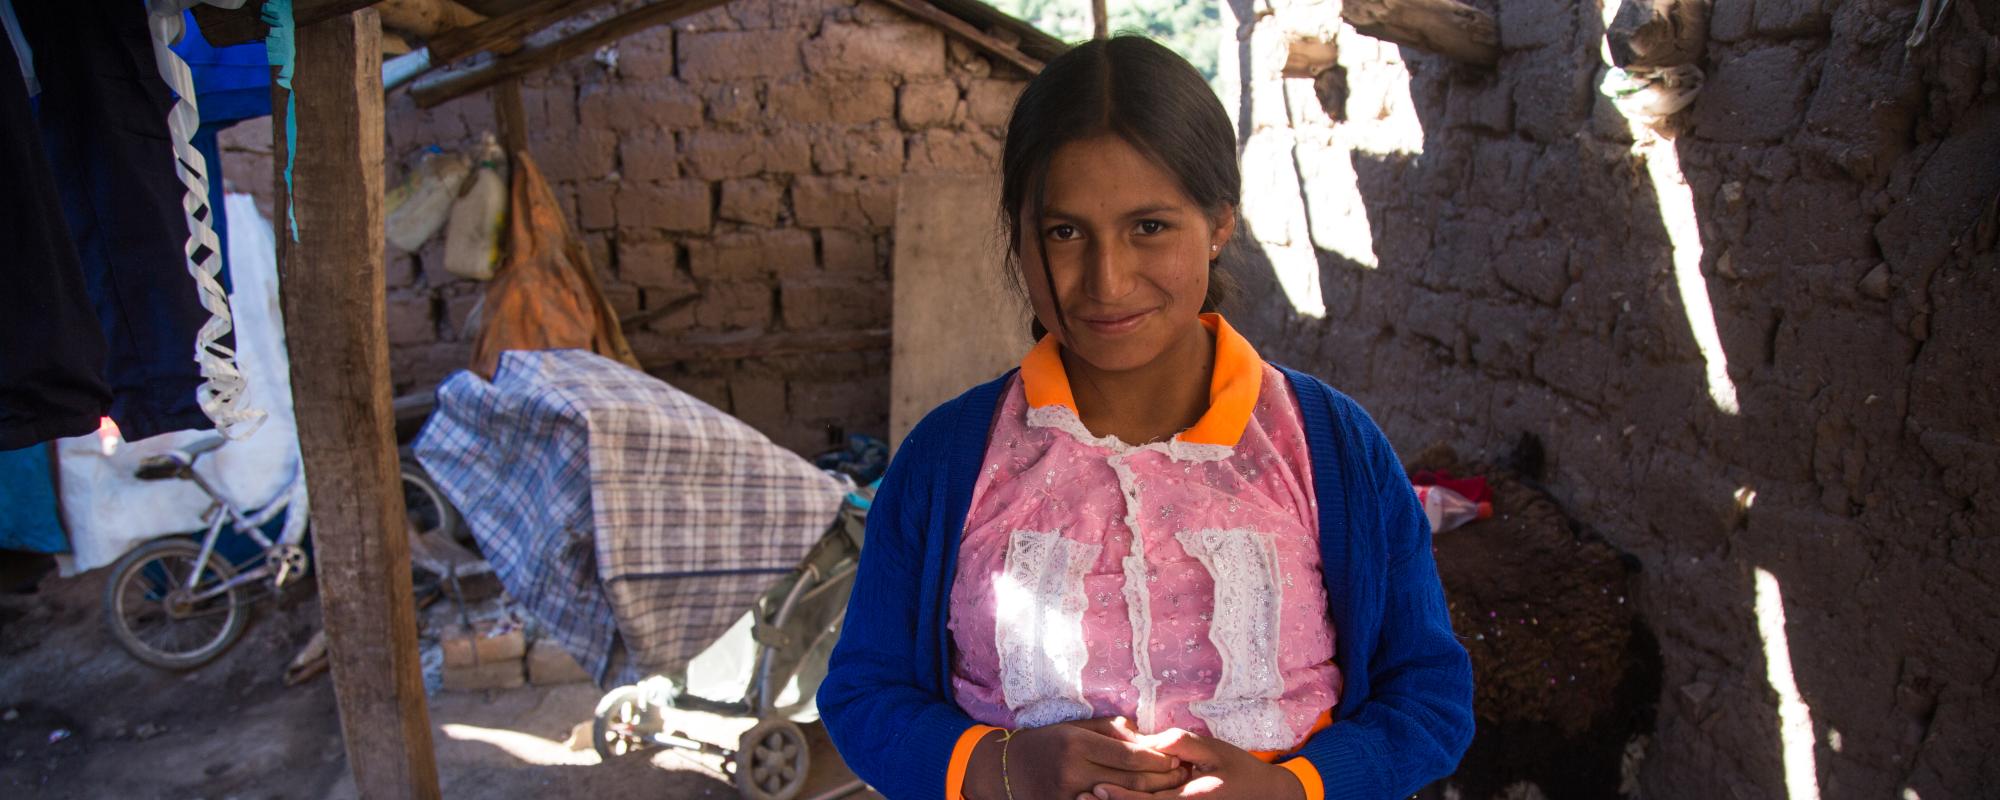 Young Peruvian girl at home